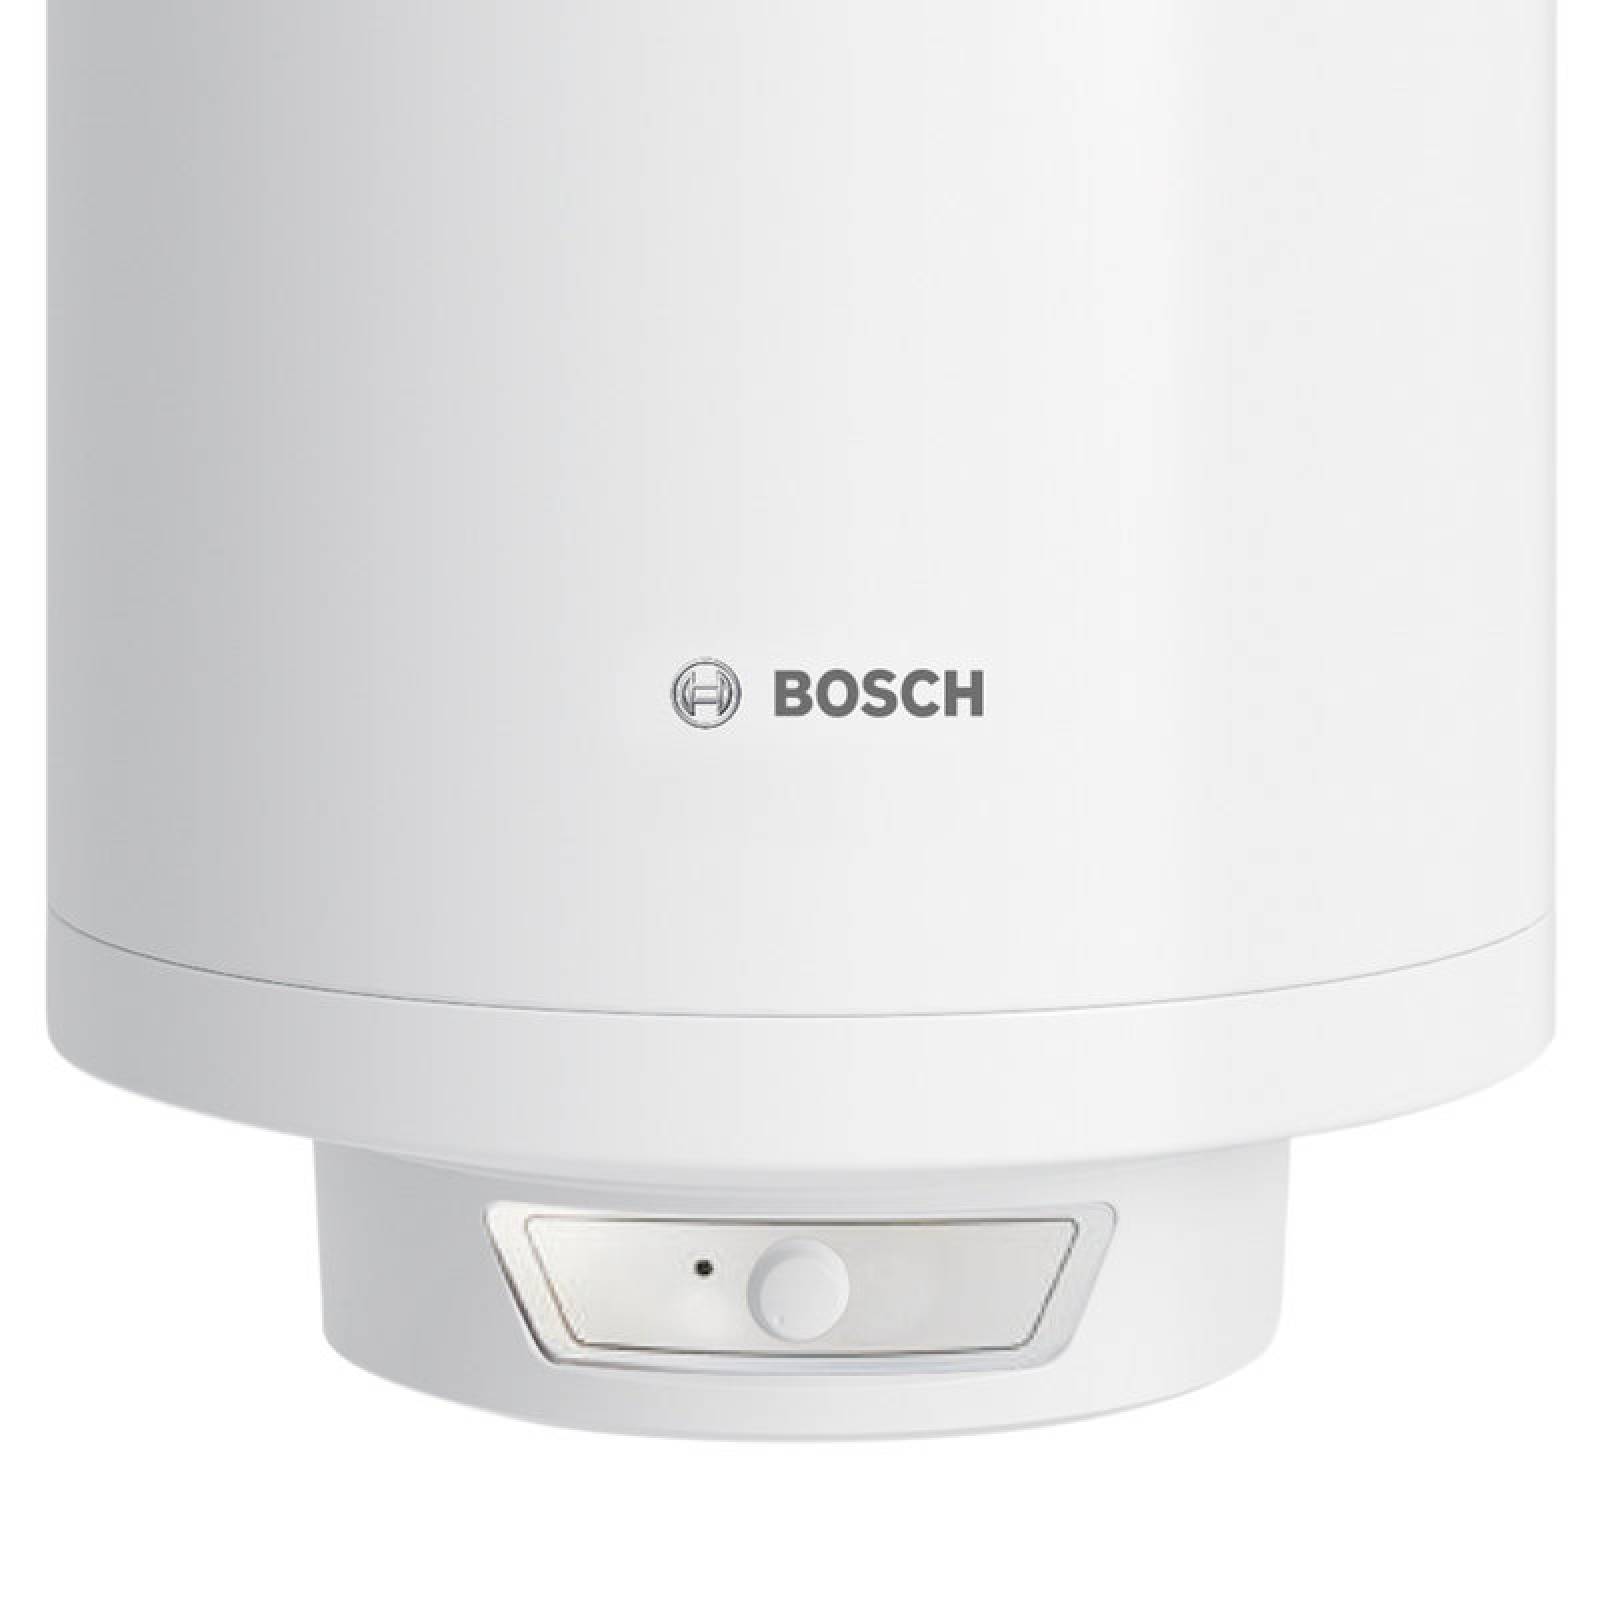 Calentador Electrico Deposito Thermotank 3 Serv 120L Bosch